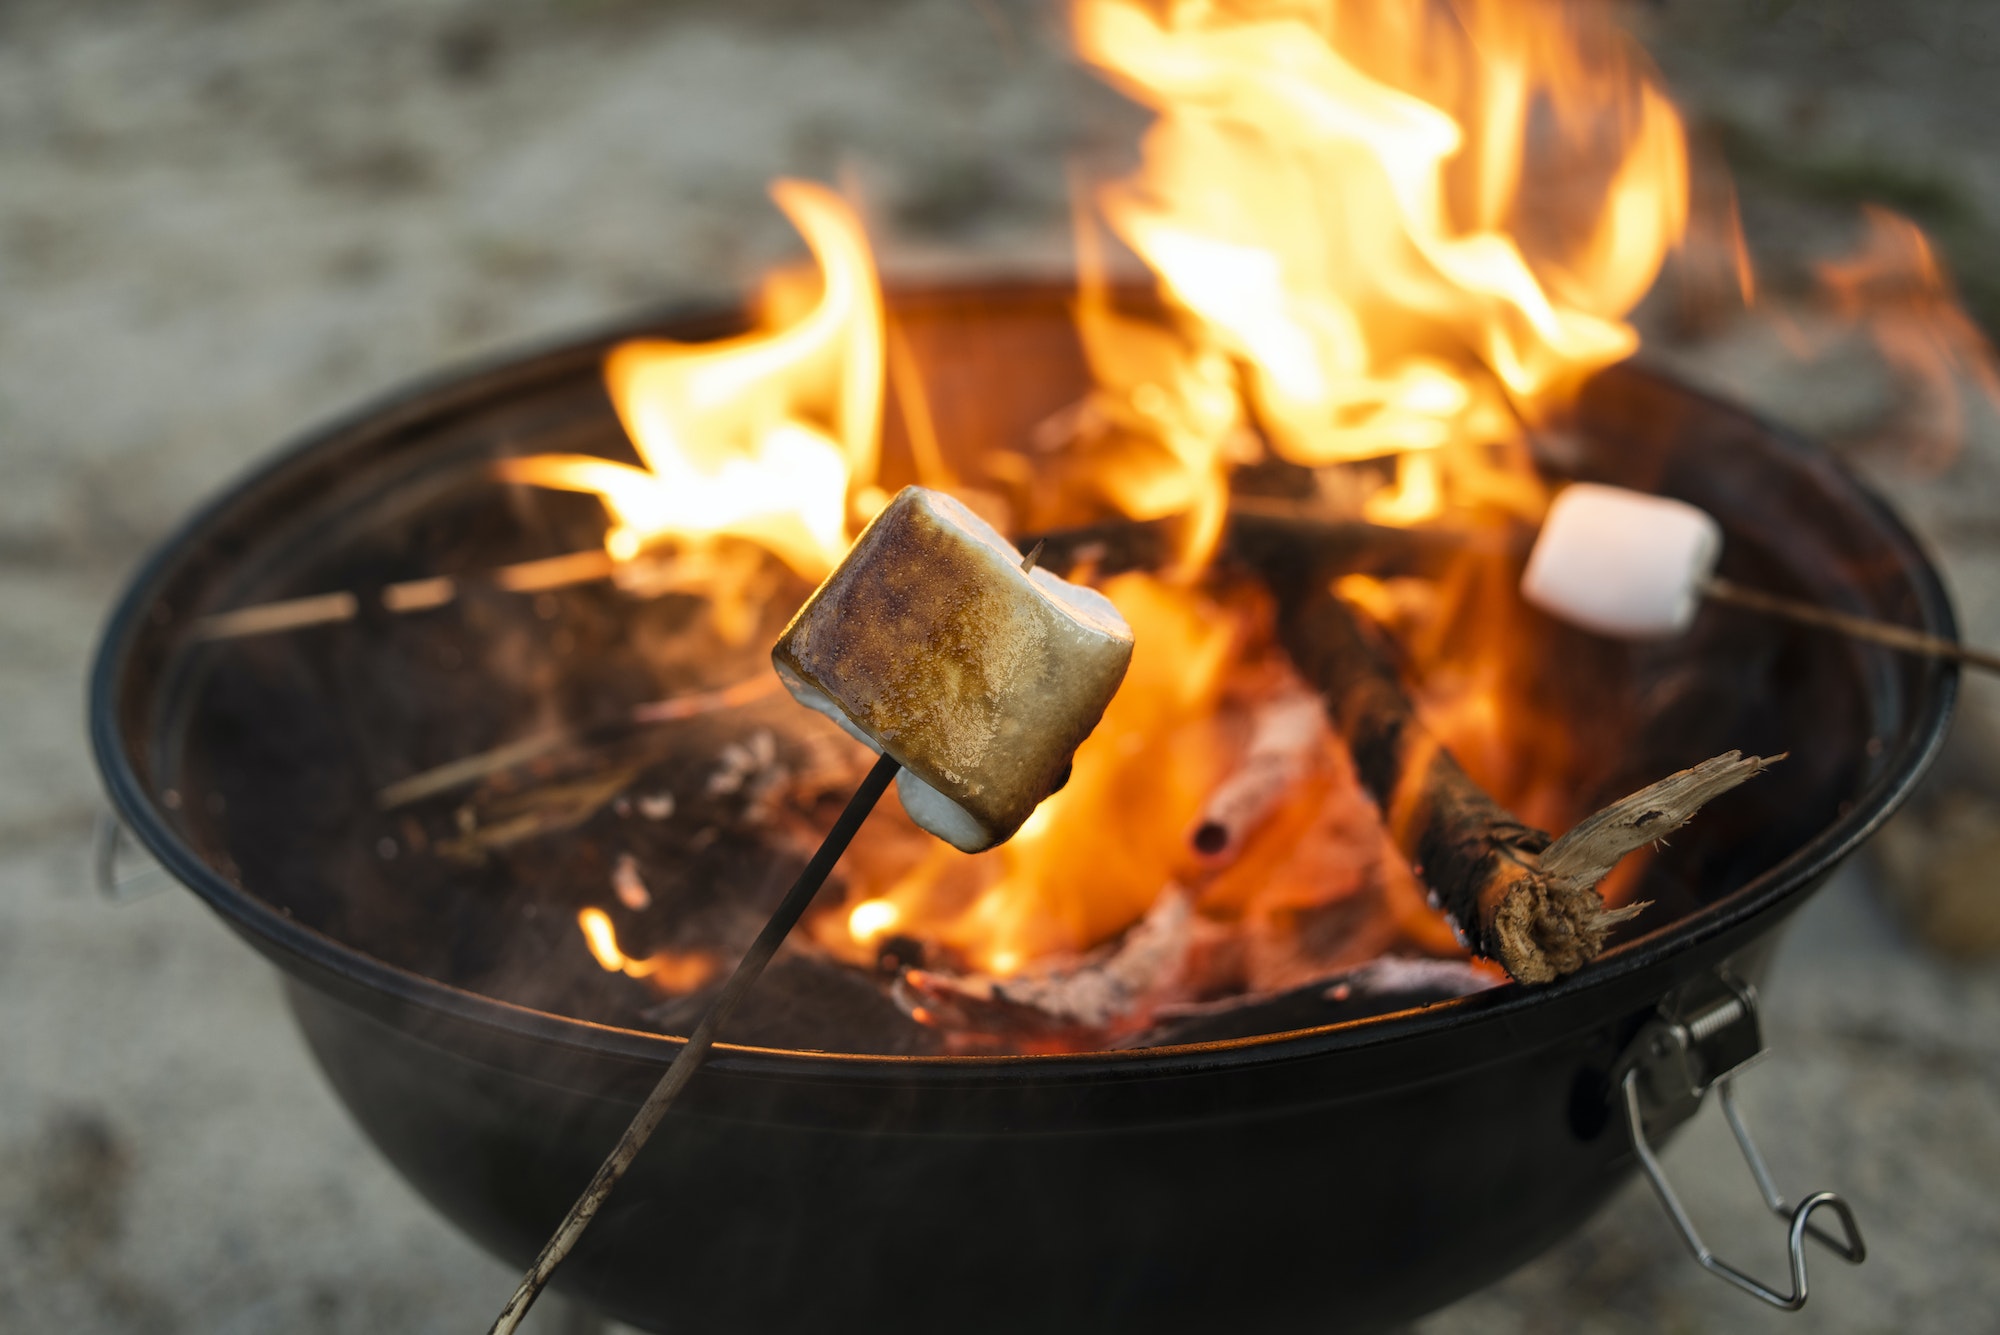 Roasted marshmallow on fire